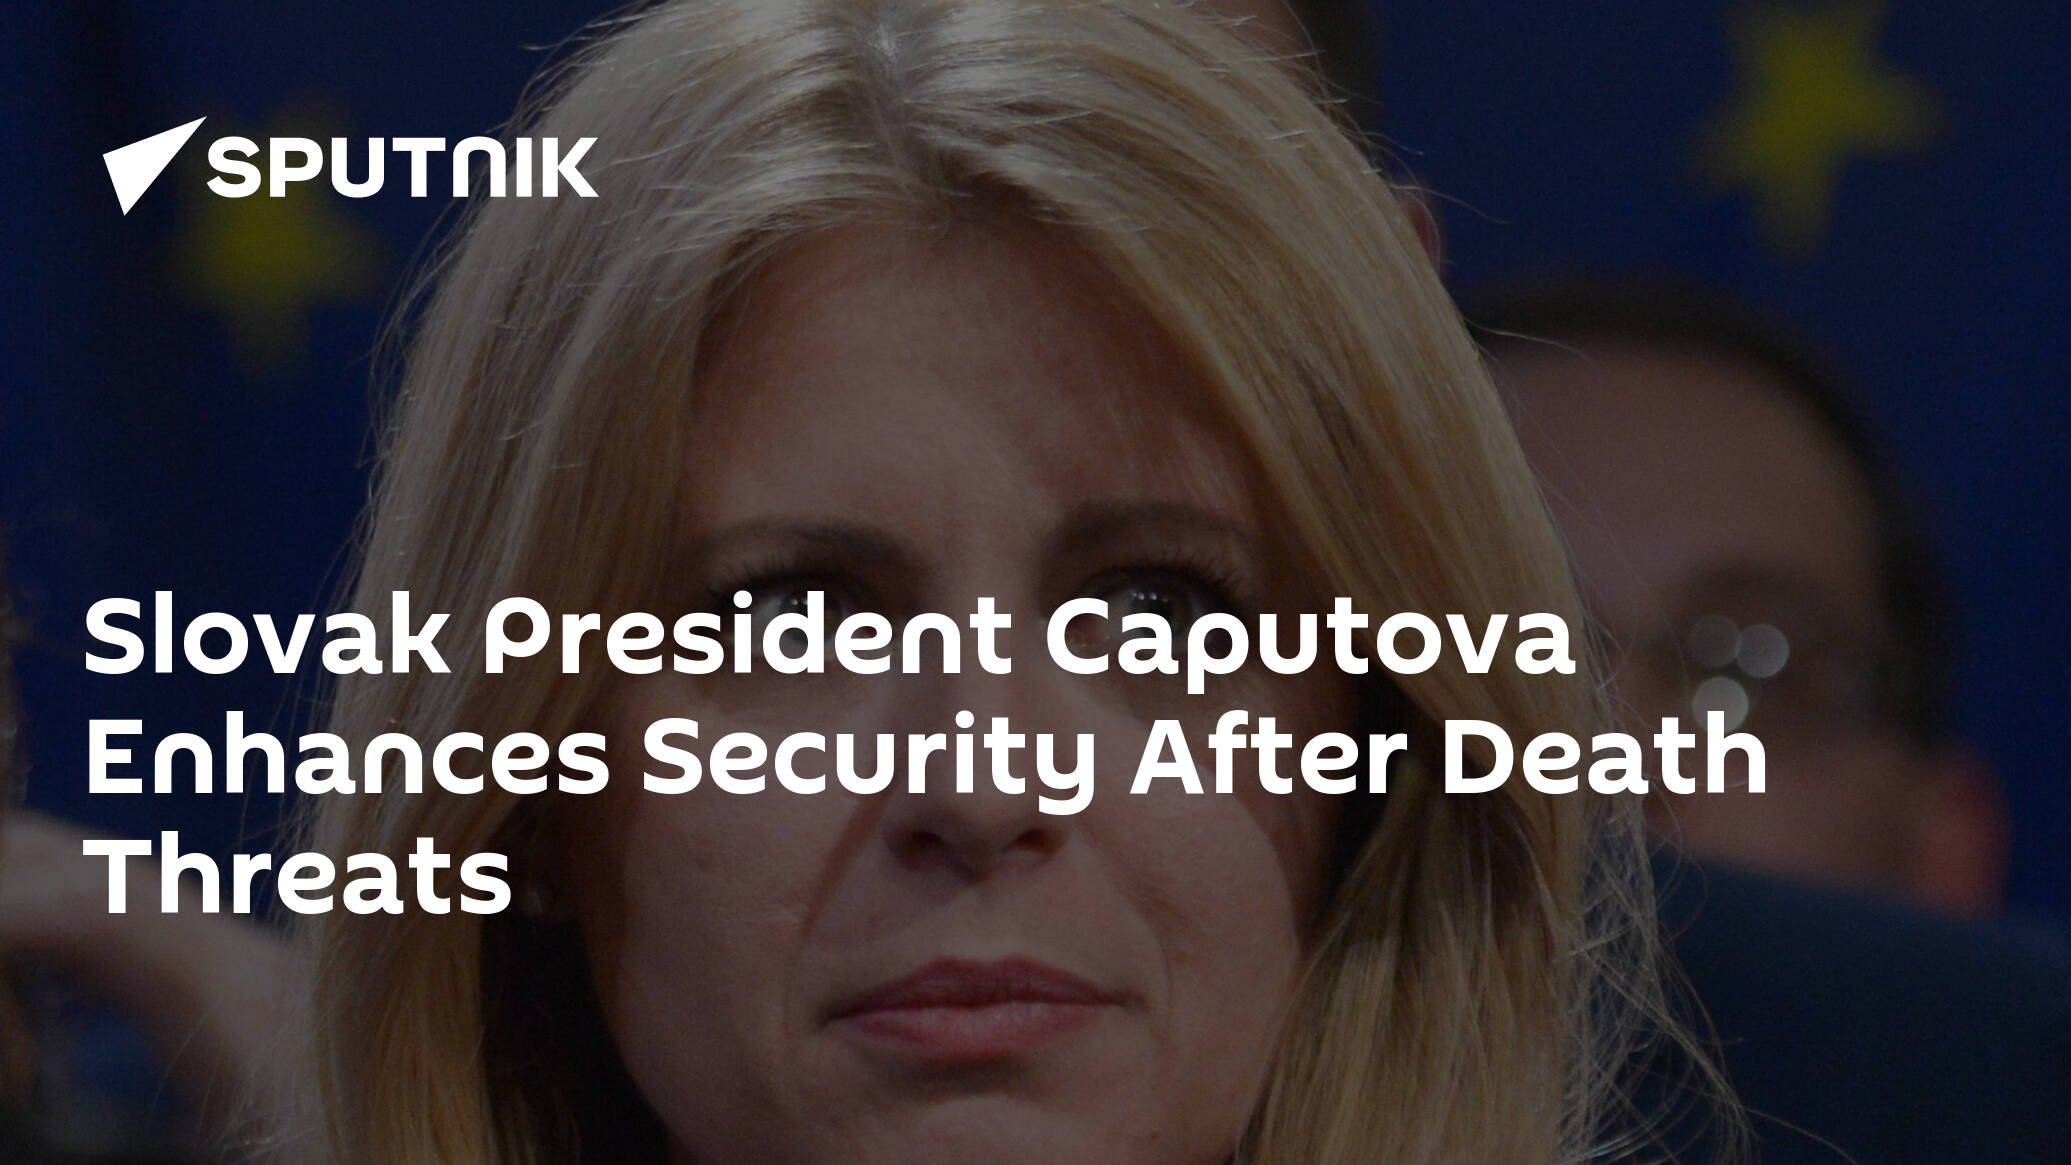 Slovak President Caputova Enhances Security After Death Threats